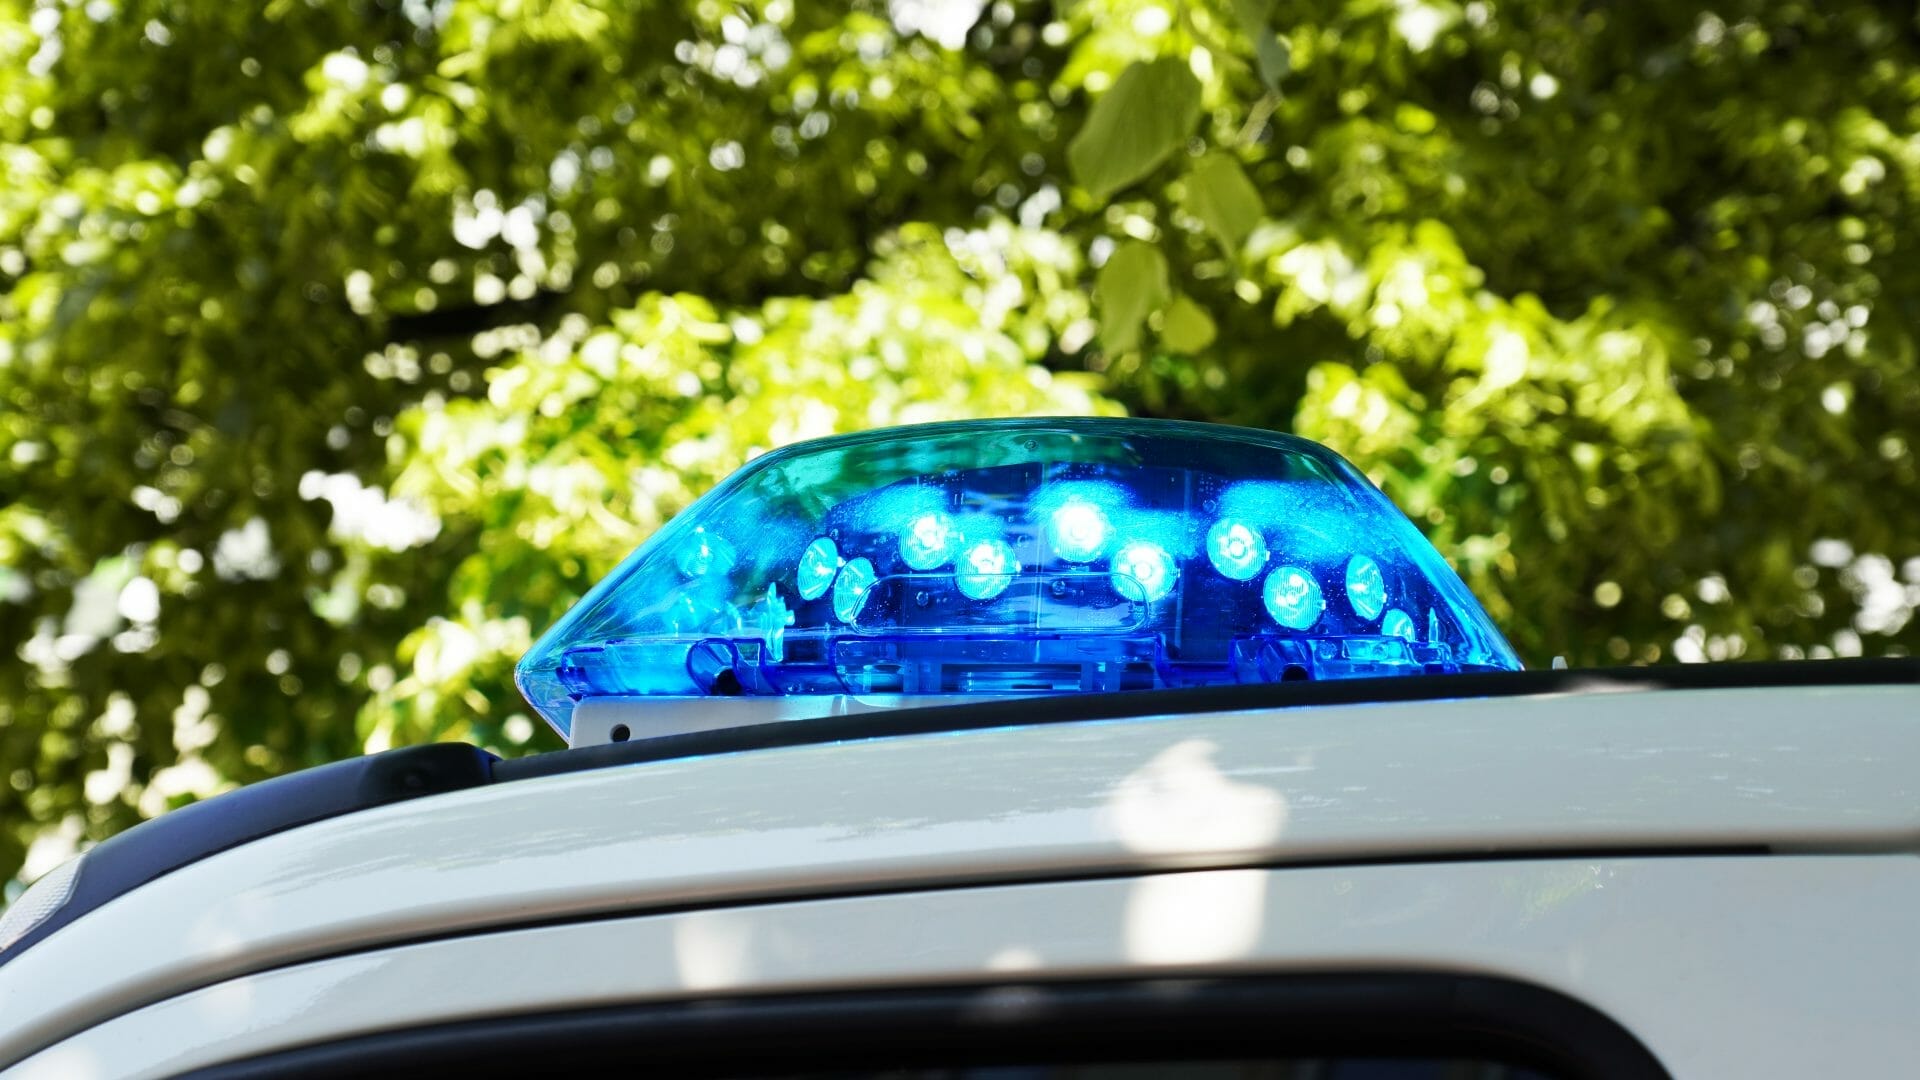 Emergency Blue Light On Police Car Roof Known As B 2023 06 13 00 23 58 Utc